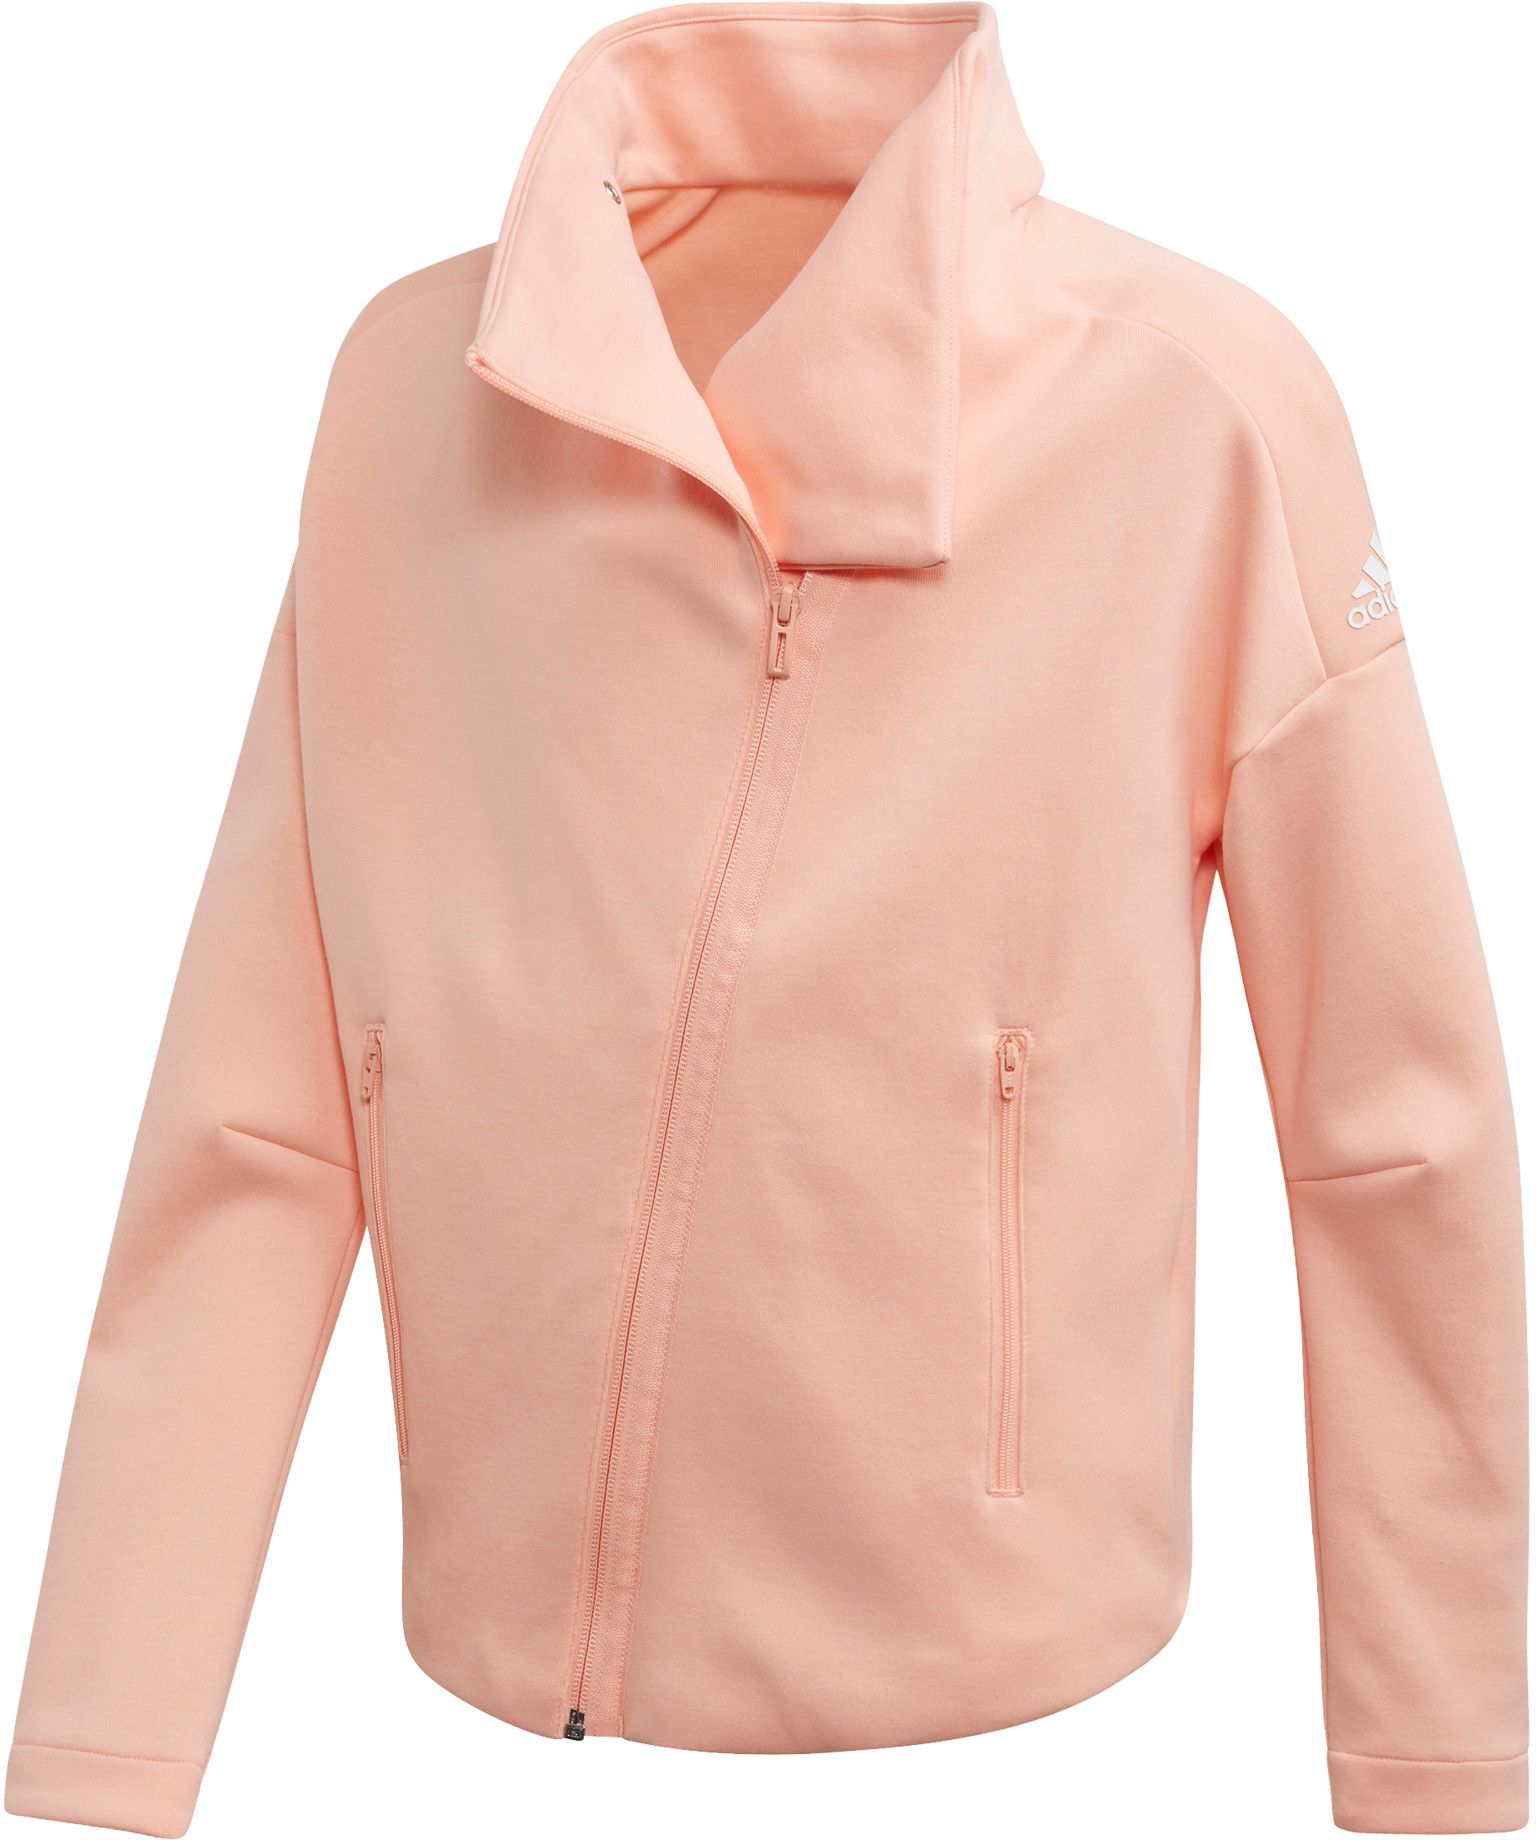 adidas girl jacket pink